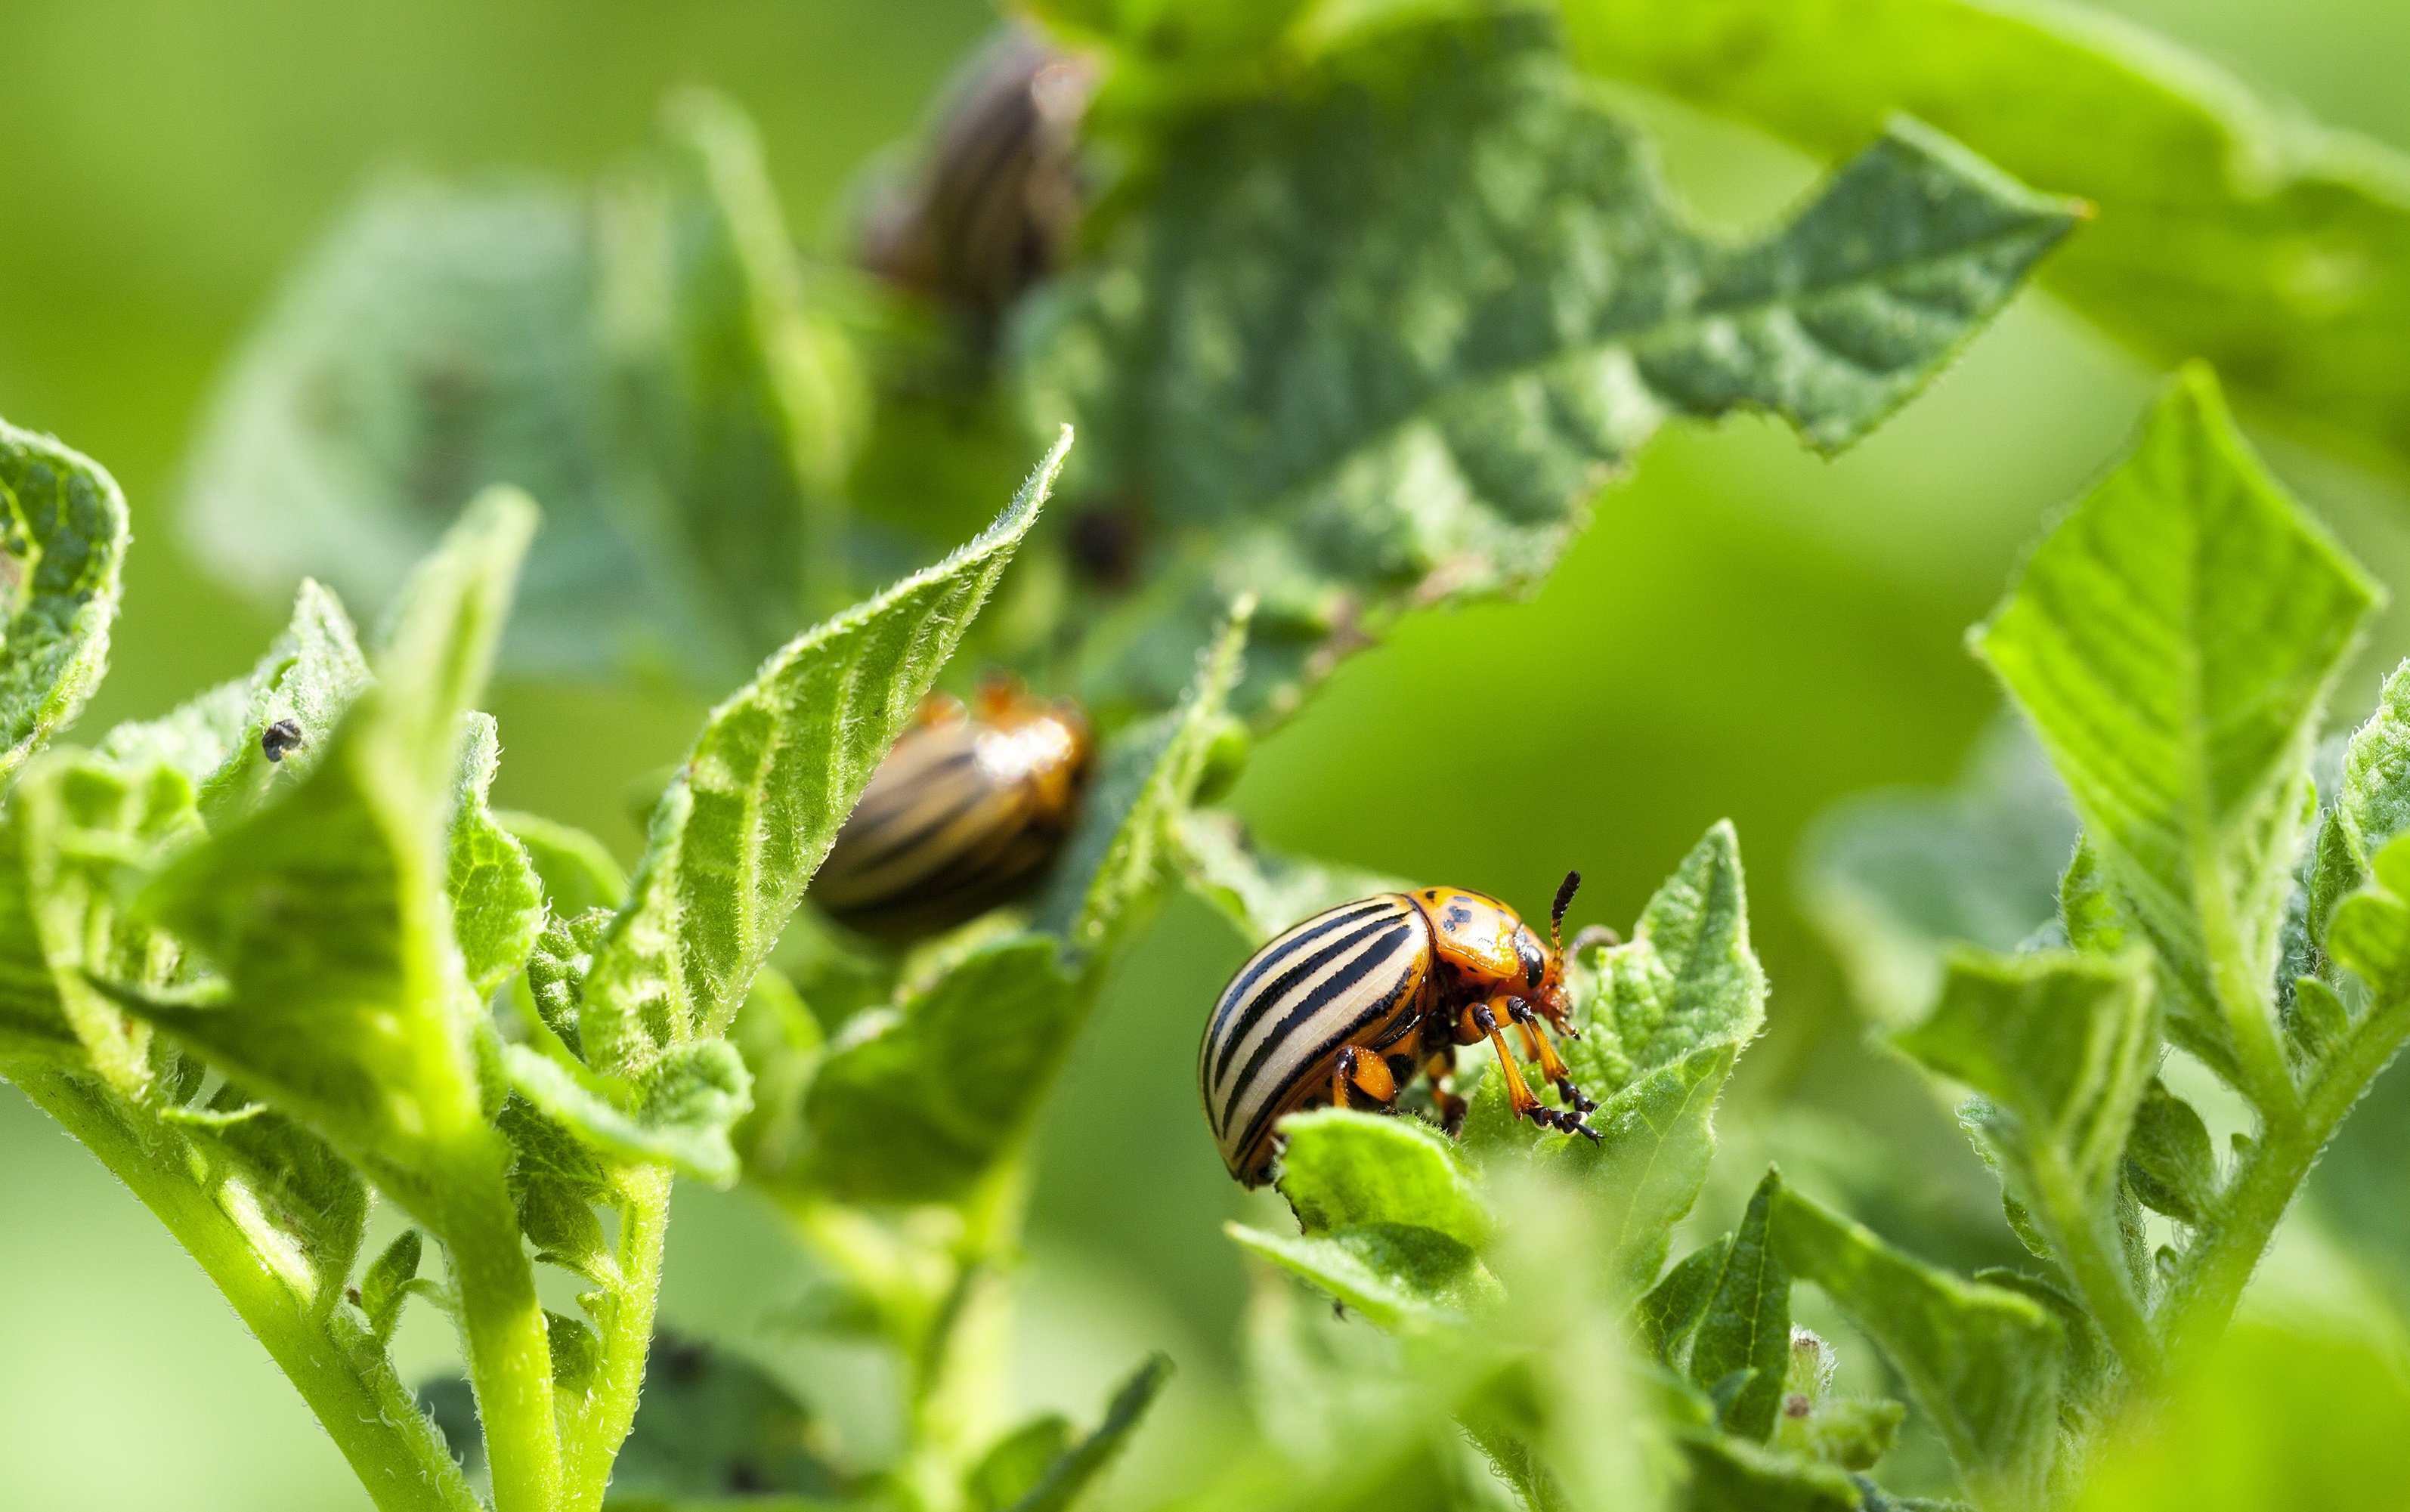 Potato beetles crawling on plants